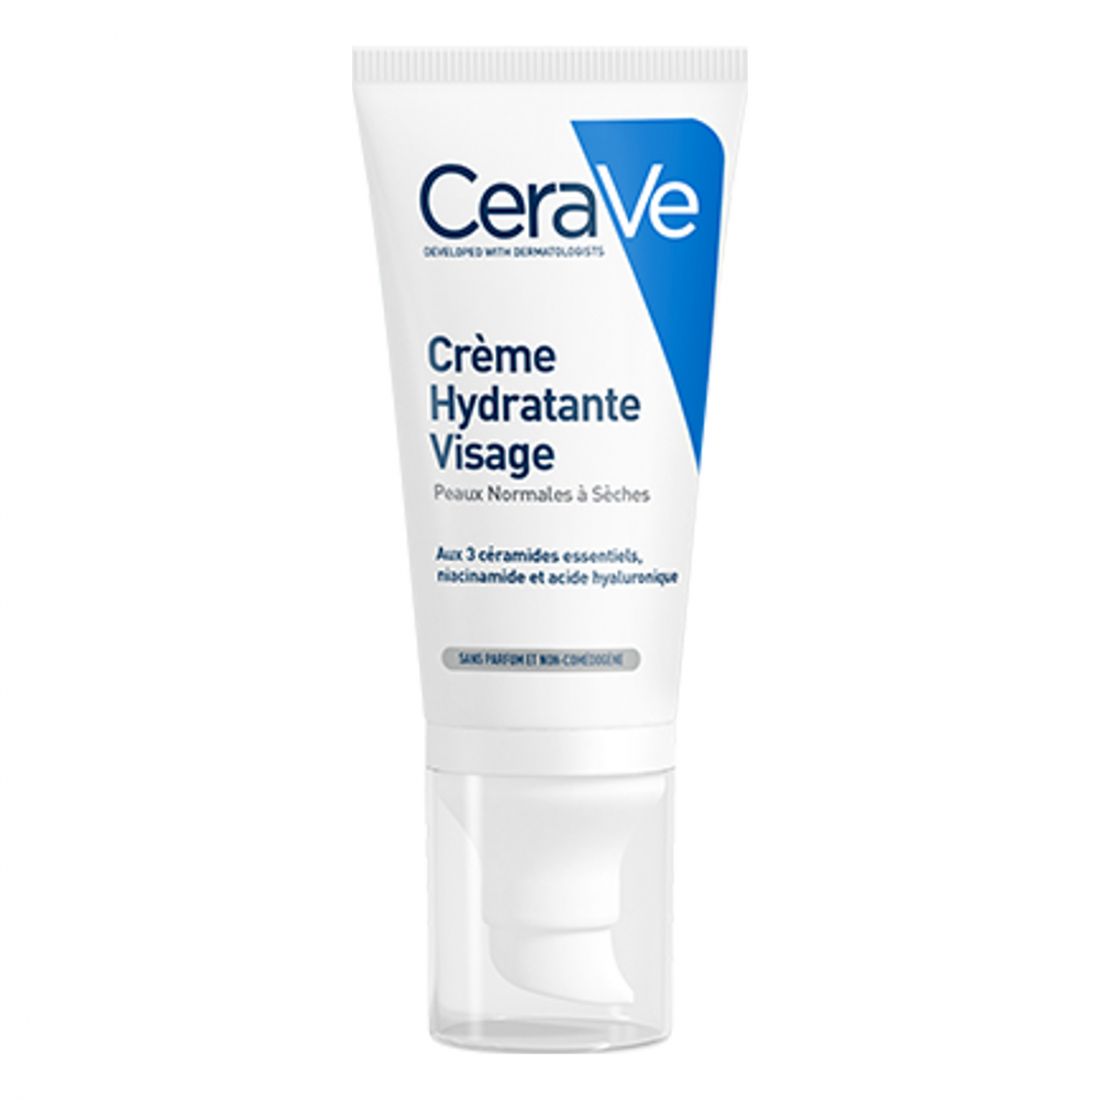 Cerave - Crème visage 'Hydratante' - 52 ml